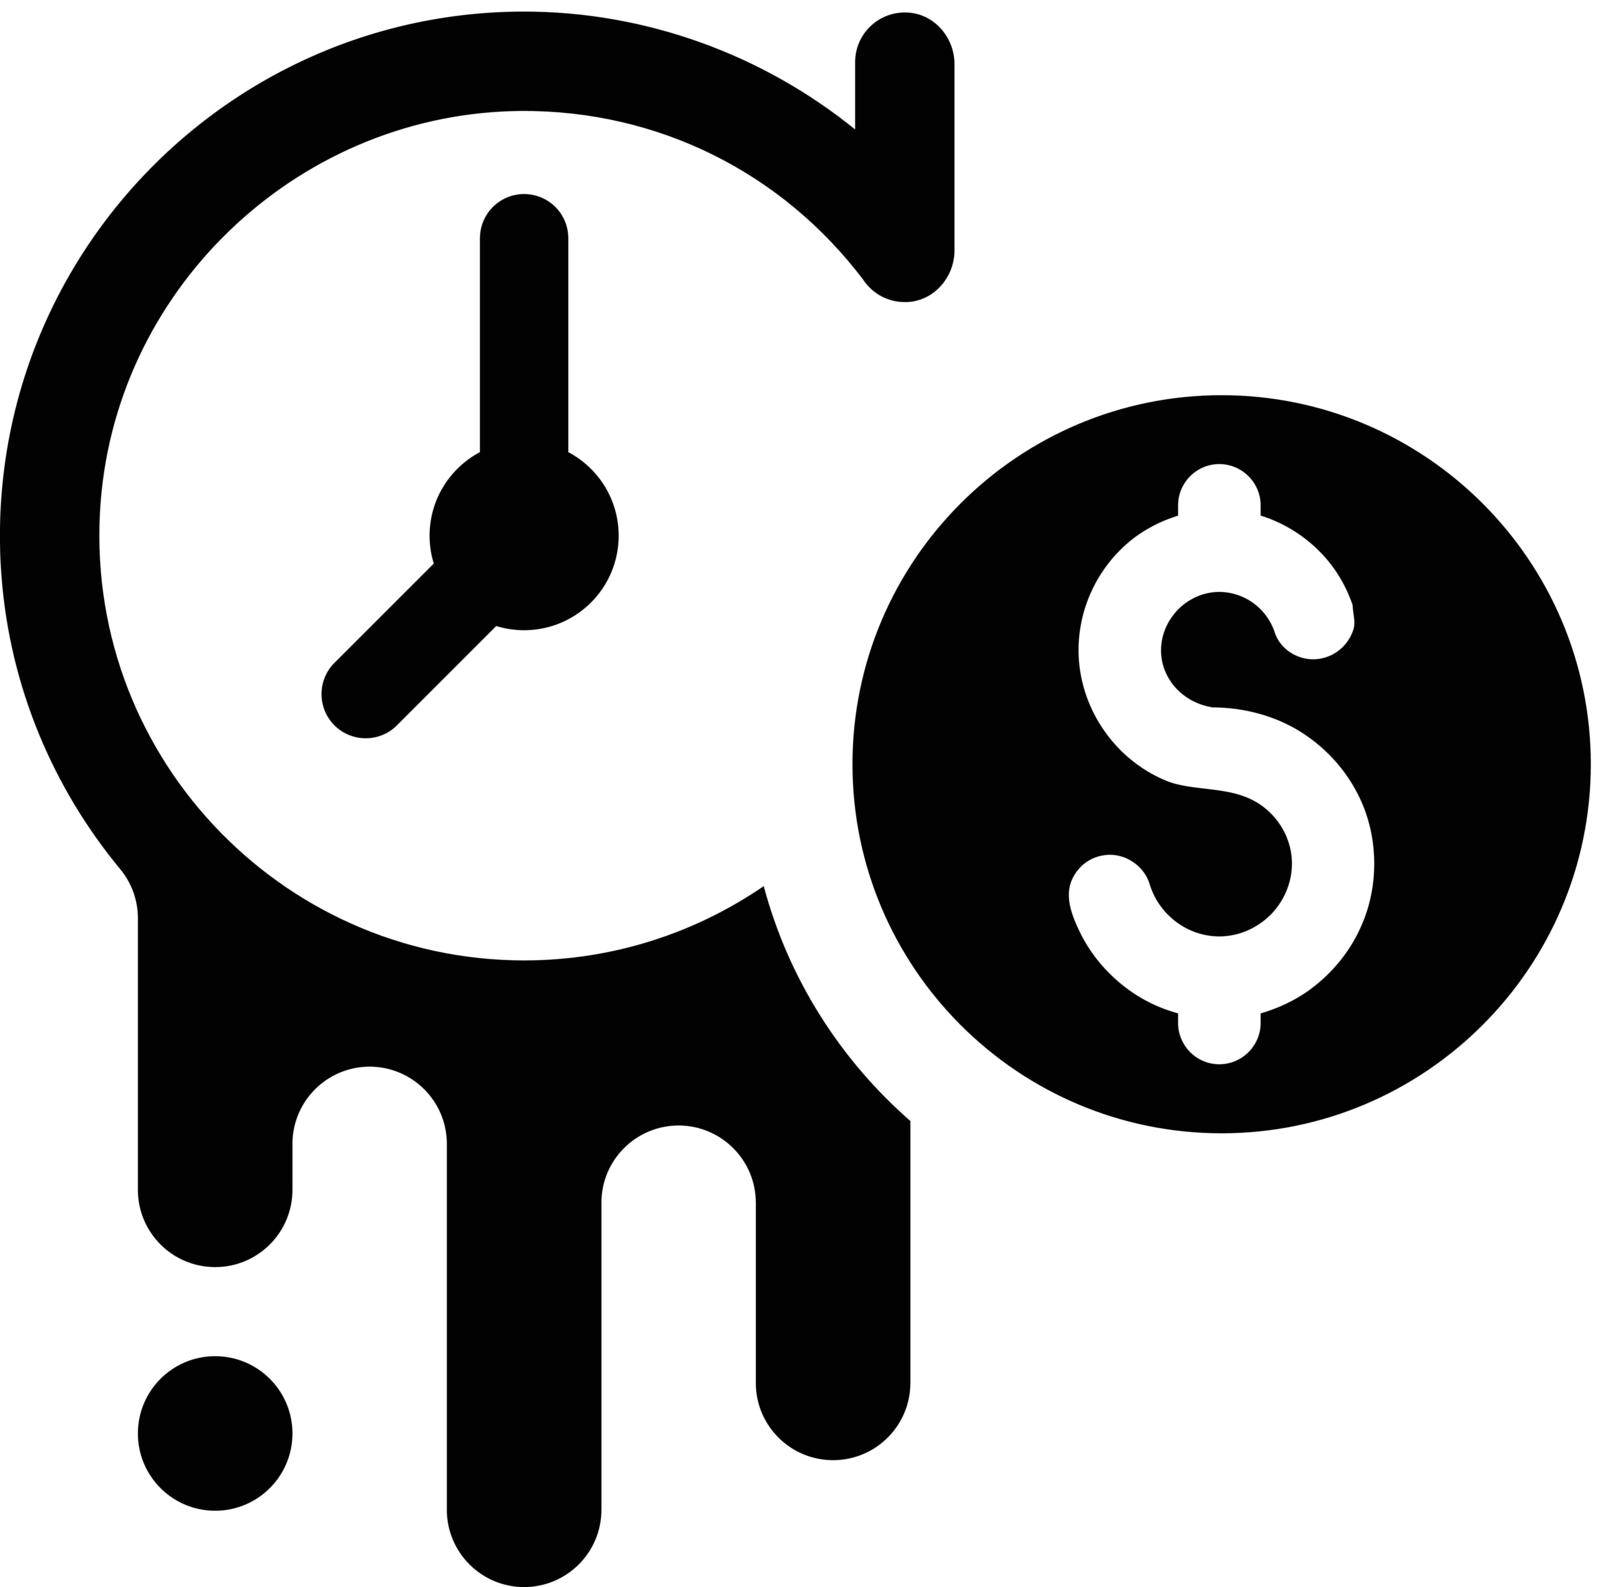 Loan term icon - Simple vector illustration